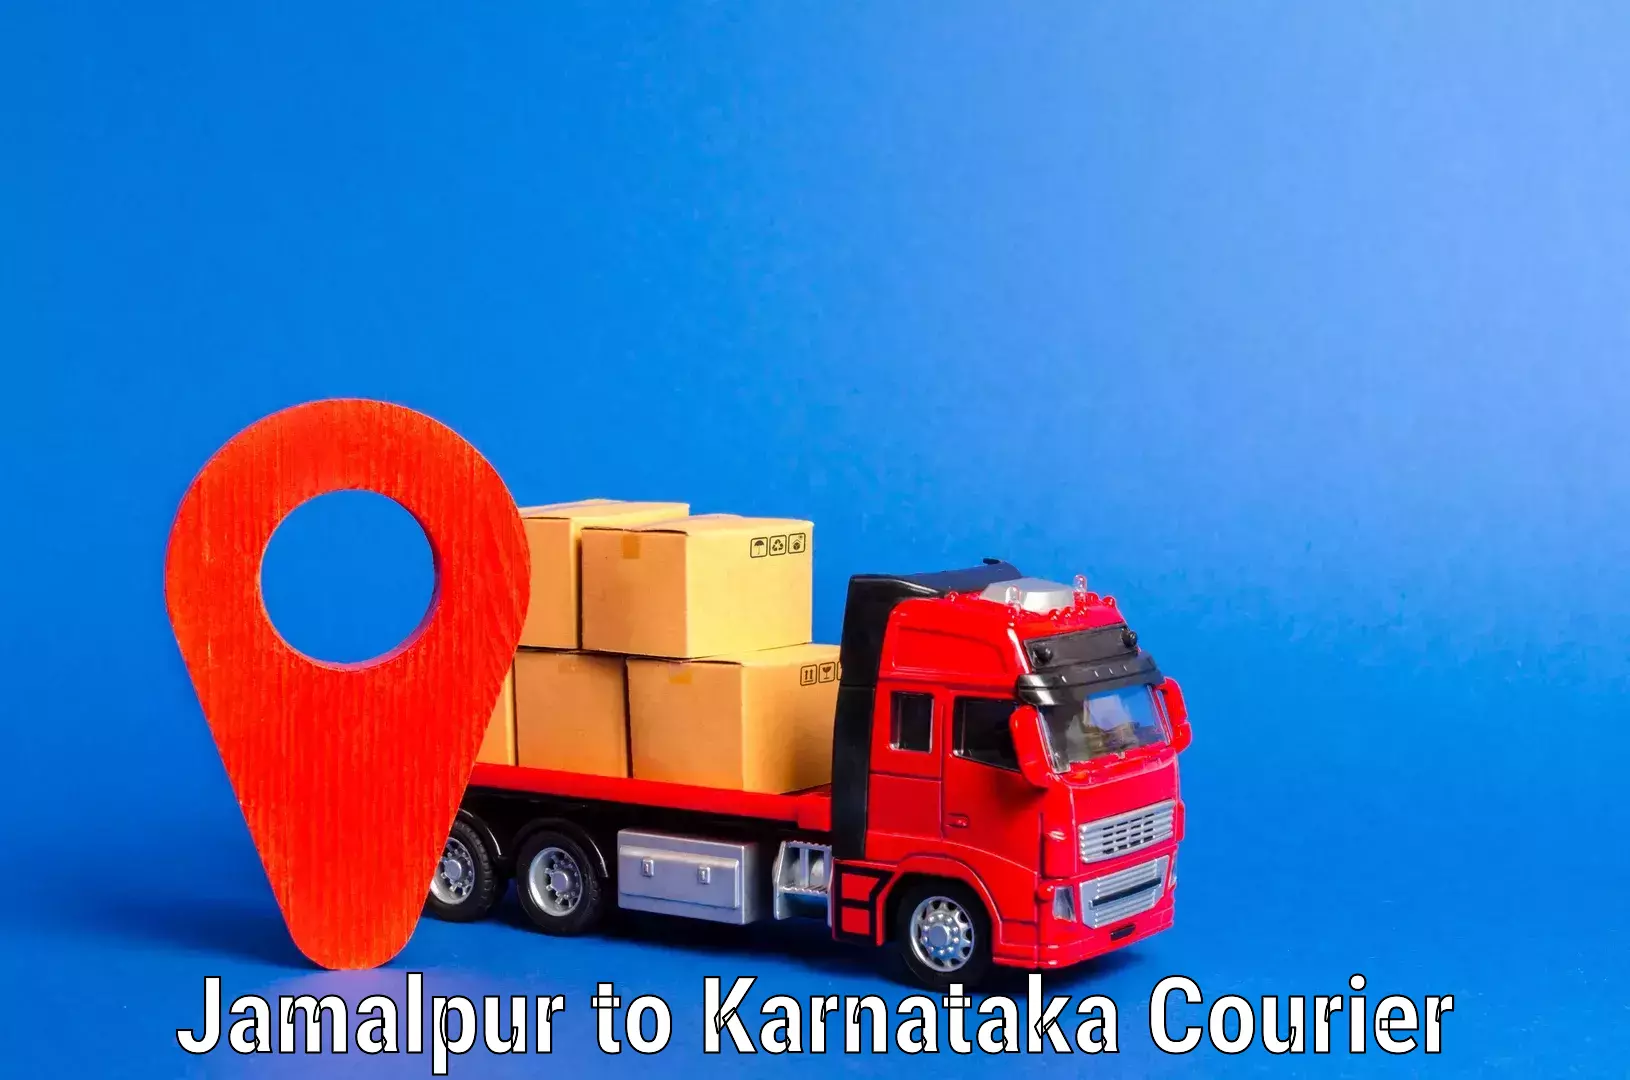 Furniture transport specialists Jamalpur to Karnataka